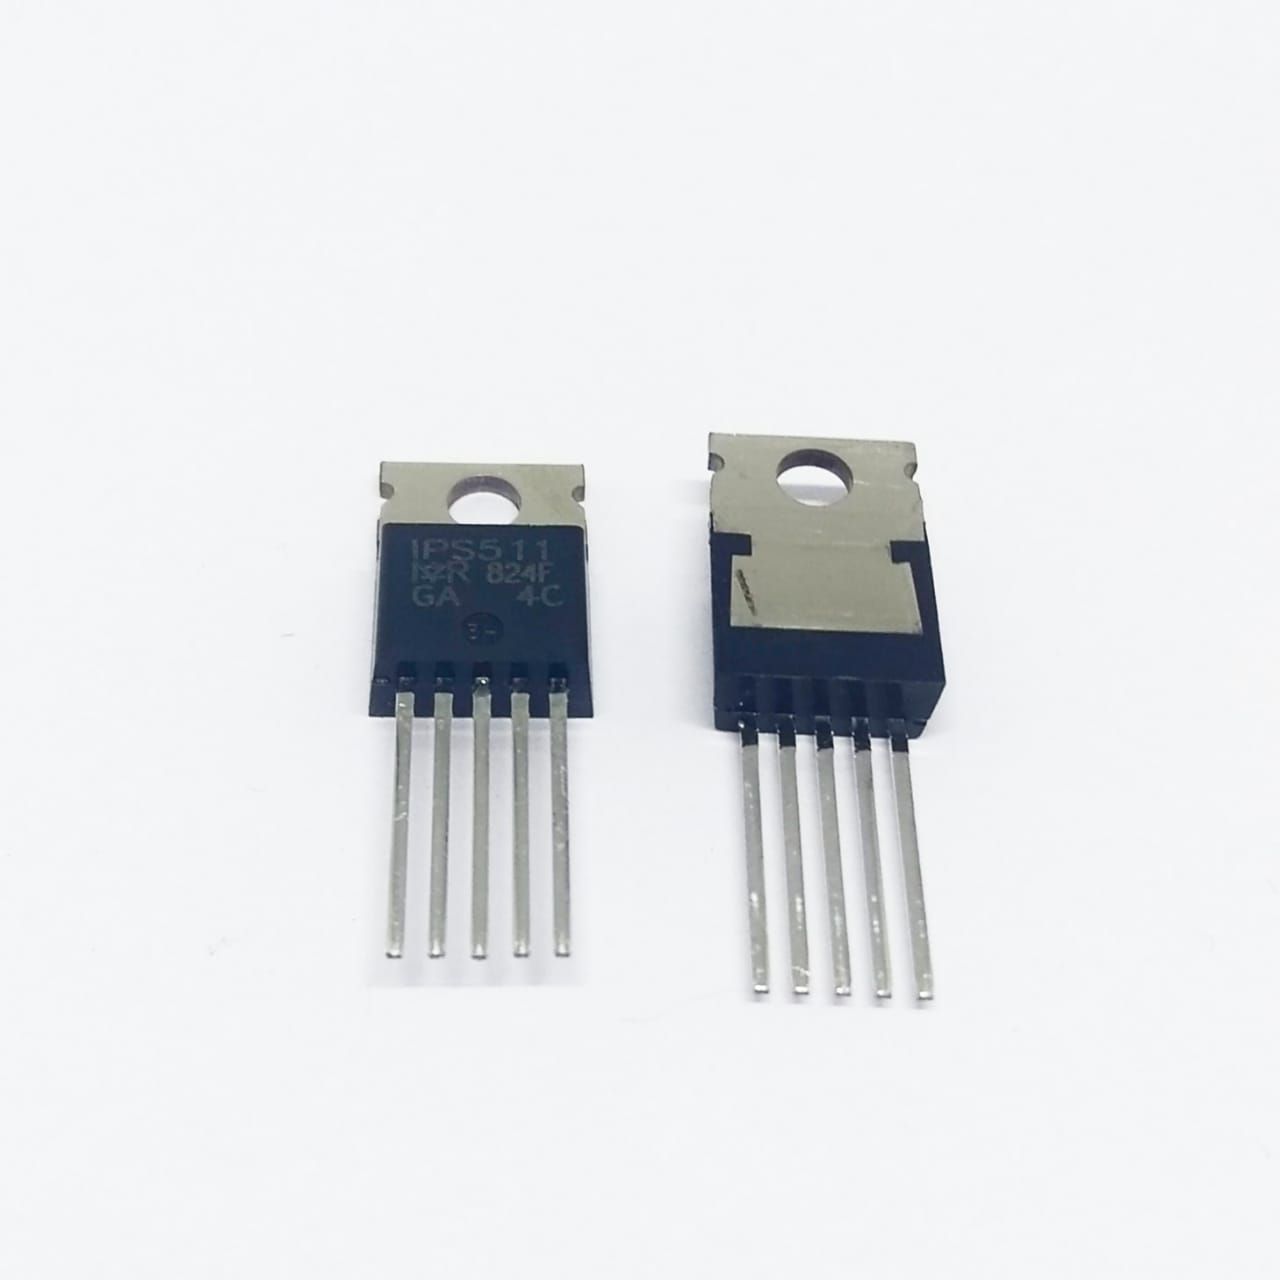 Kit 10 peças - Transistor IPS511 to-220 marca ir original